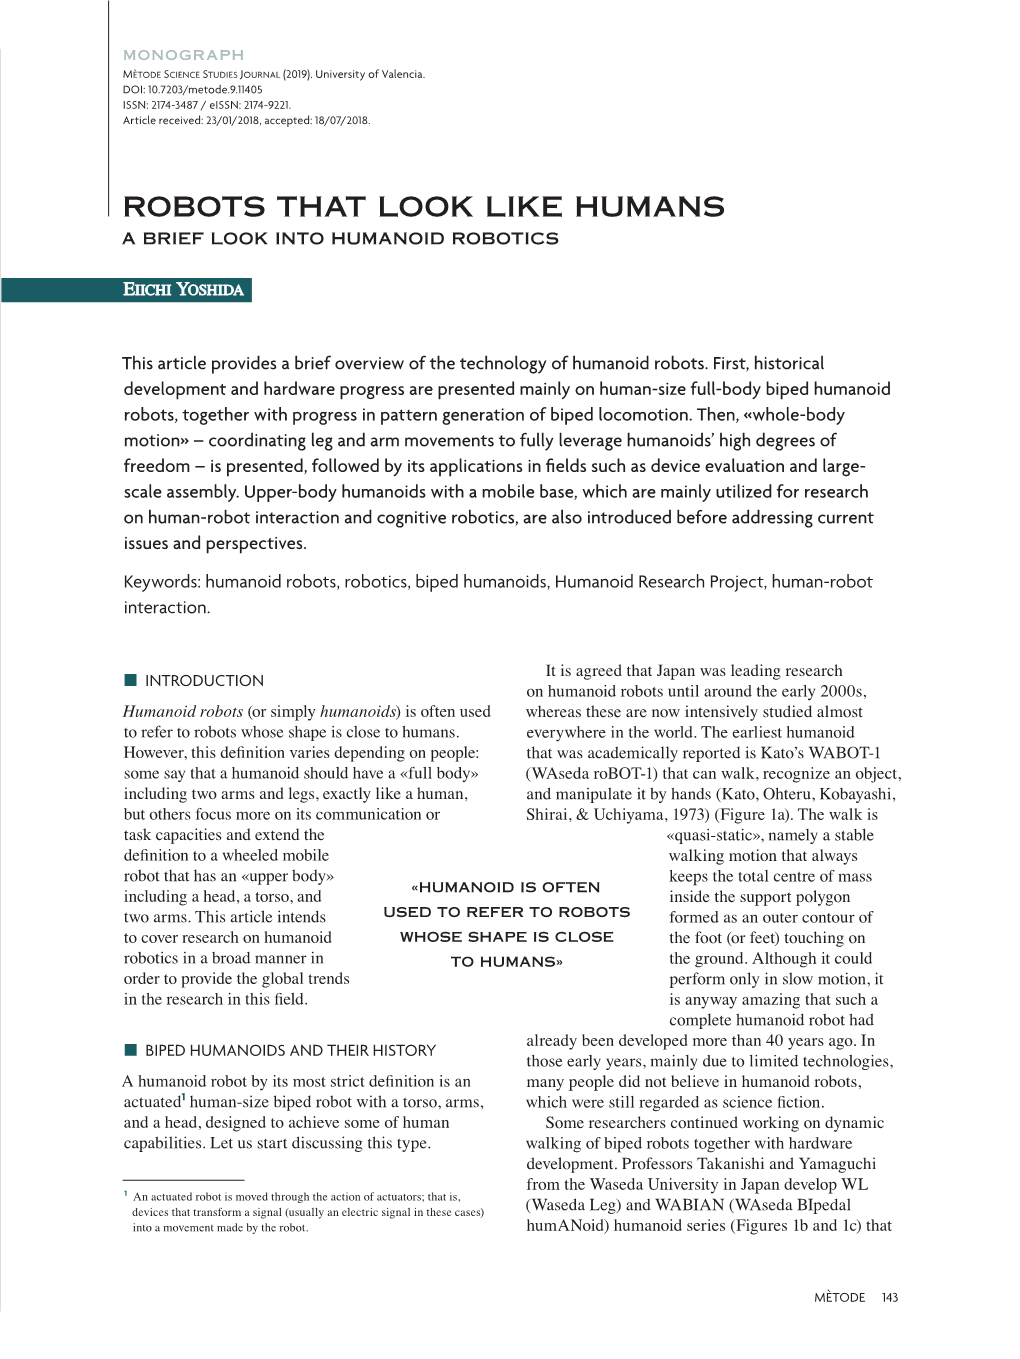 Robots That Look Like Humans a Brief Look Into Humanoid Robotics